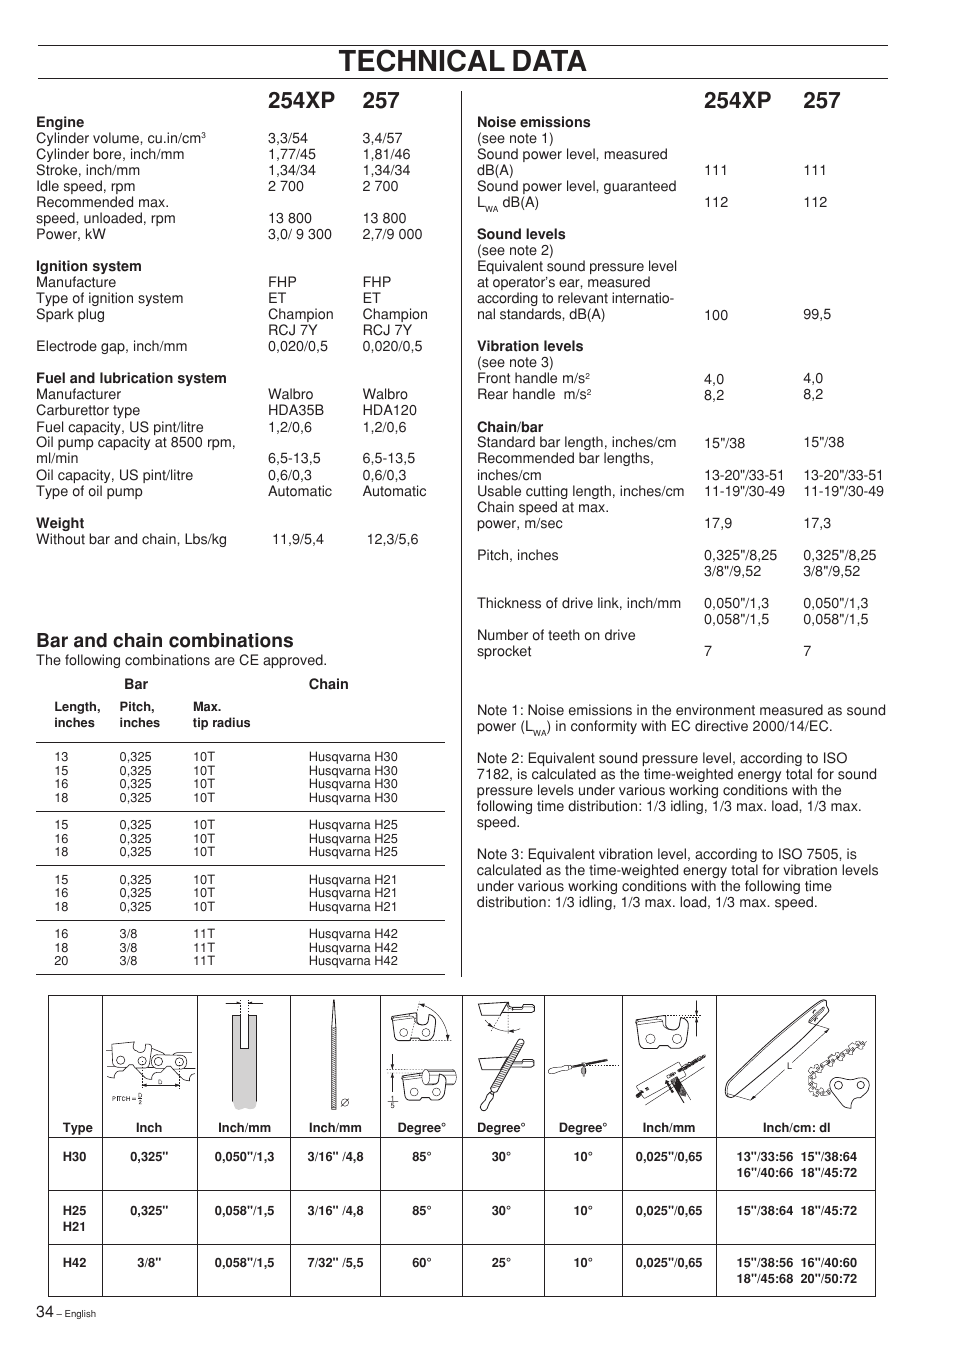 Technical data, Bar and chain combinations, 254xp | Husqvarna 354XP User  Manual | Page 34 / 40 | Original mode